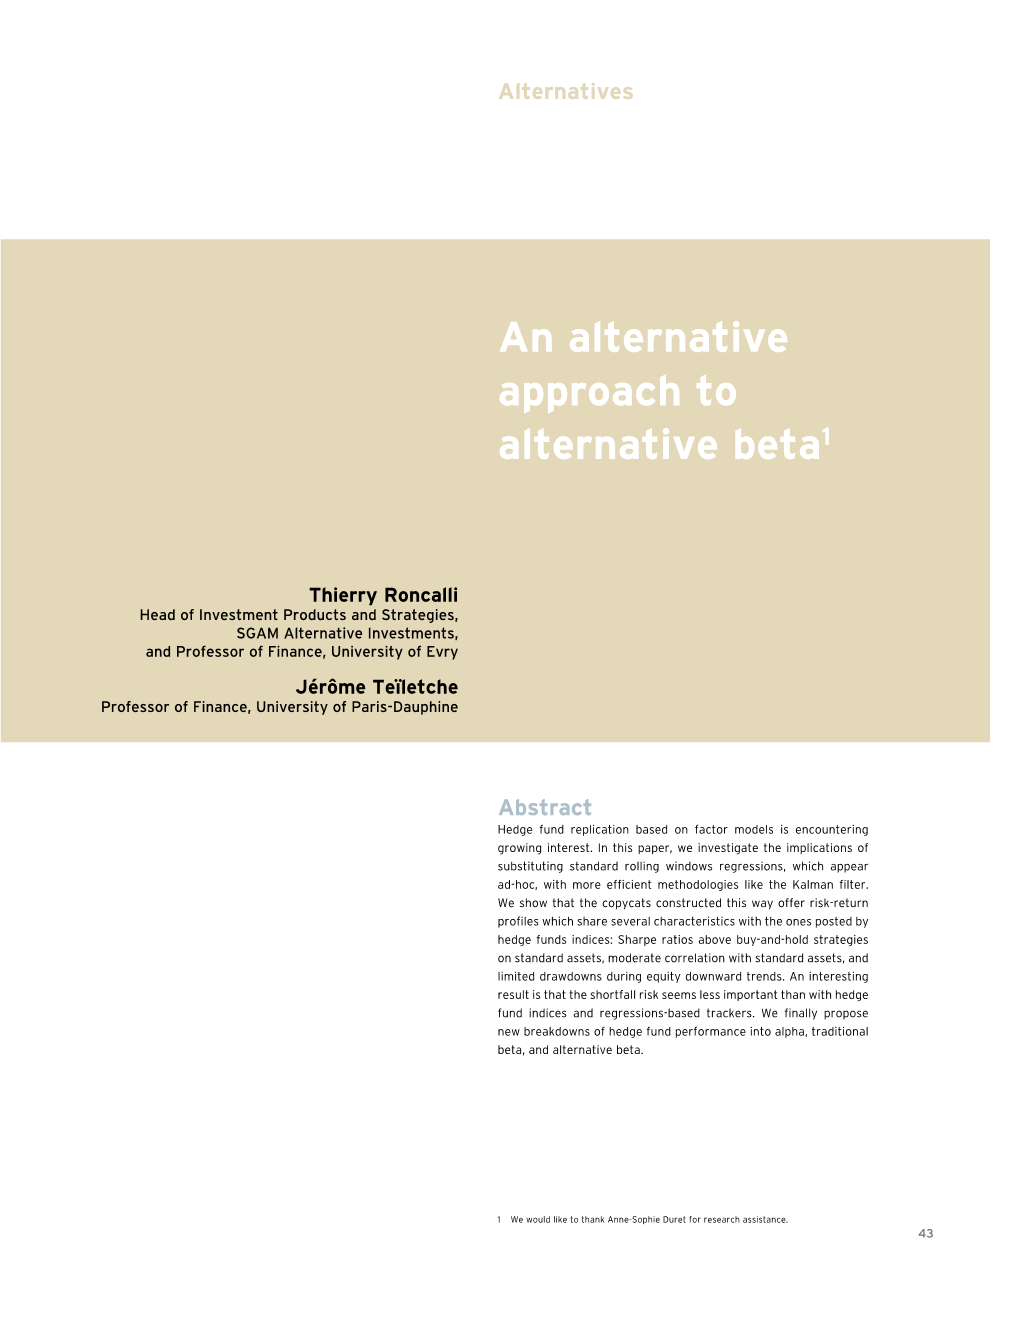 An Alternative Approach to Alternative Beta1